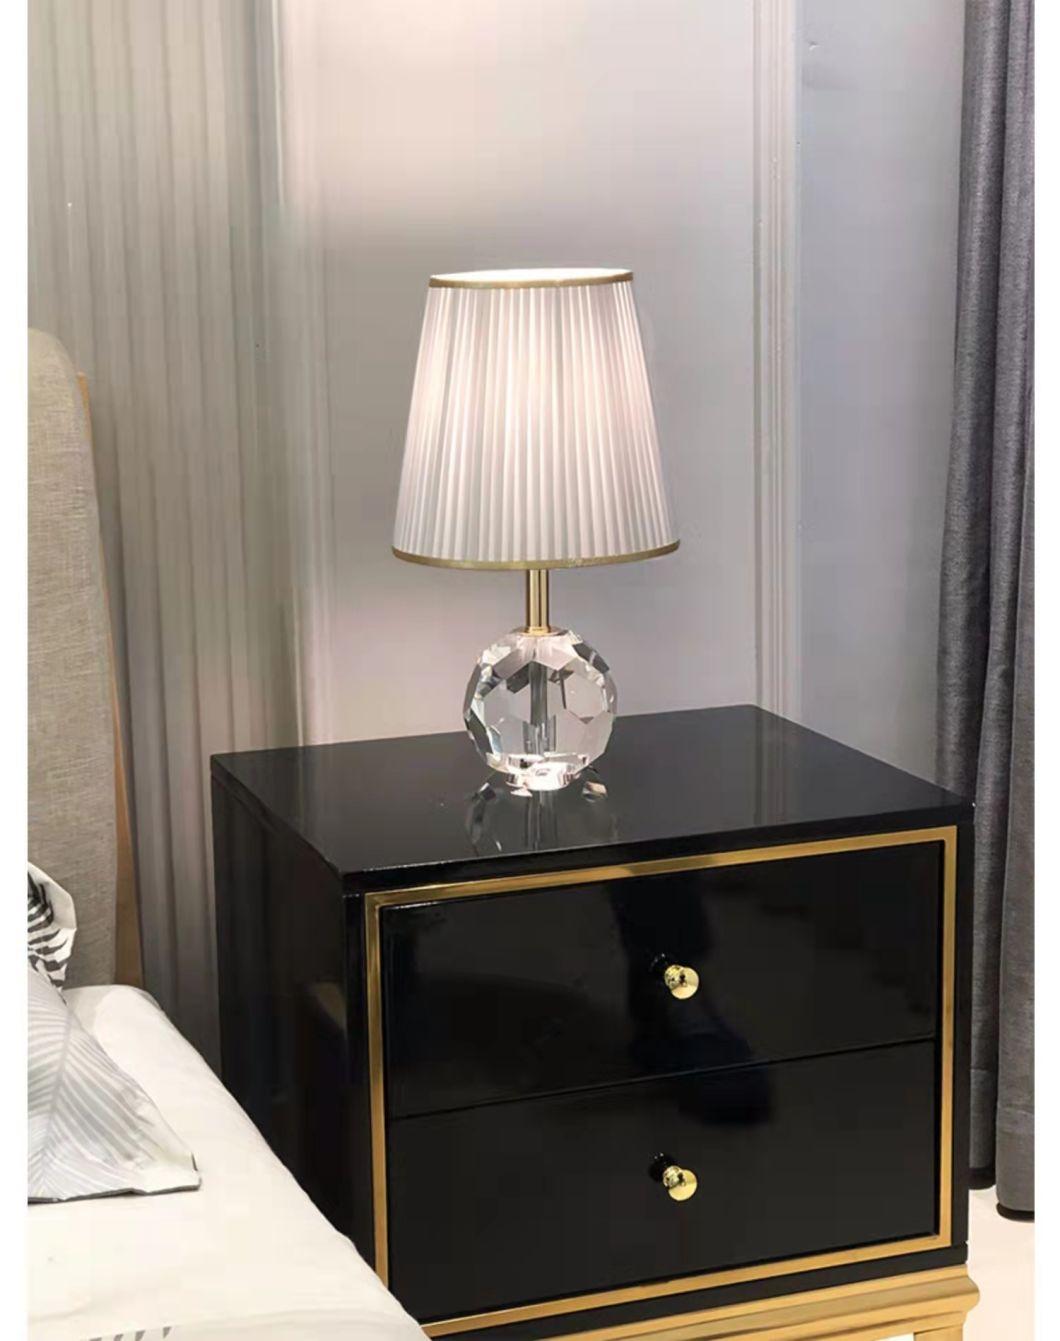 Warm Bedside Light Crystal Lamp Pleated Shade